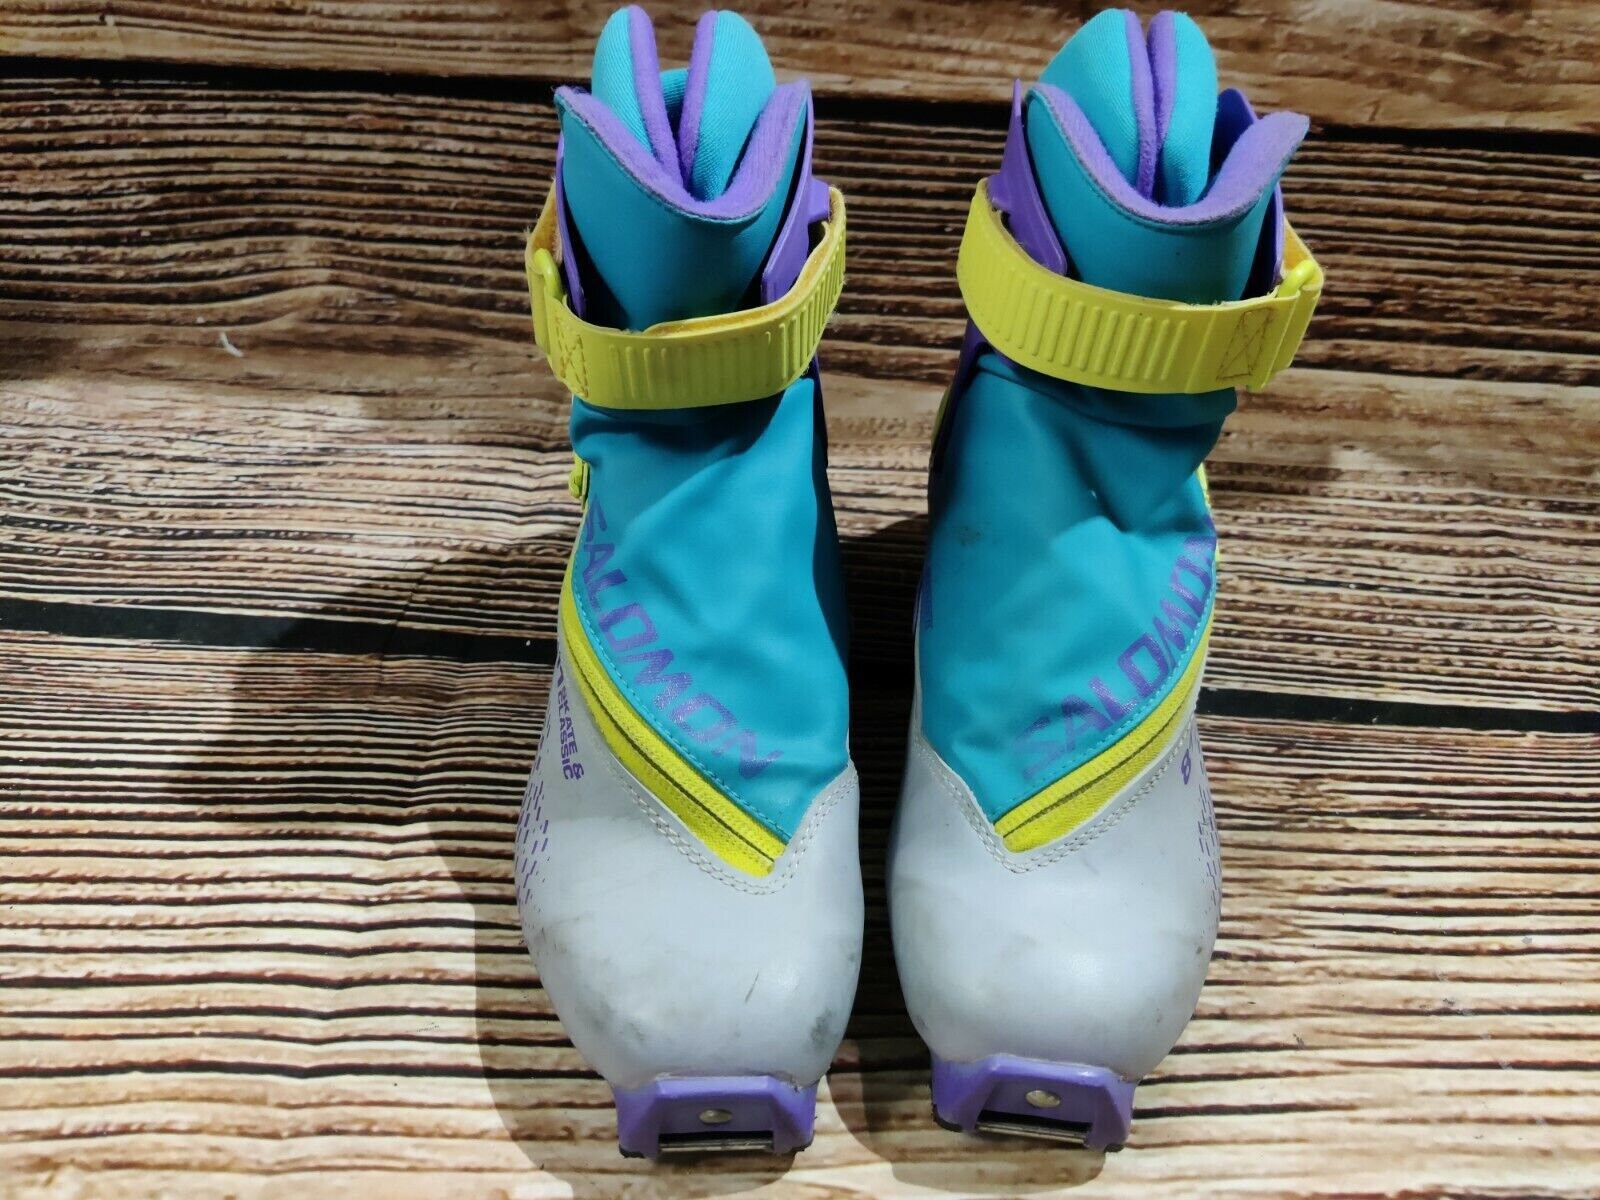 Farvel gård Penneven Salomon Skate 811 Nordic Cross Country Ski Boots Size EU 37 - Etsy 日本